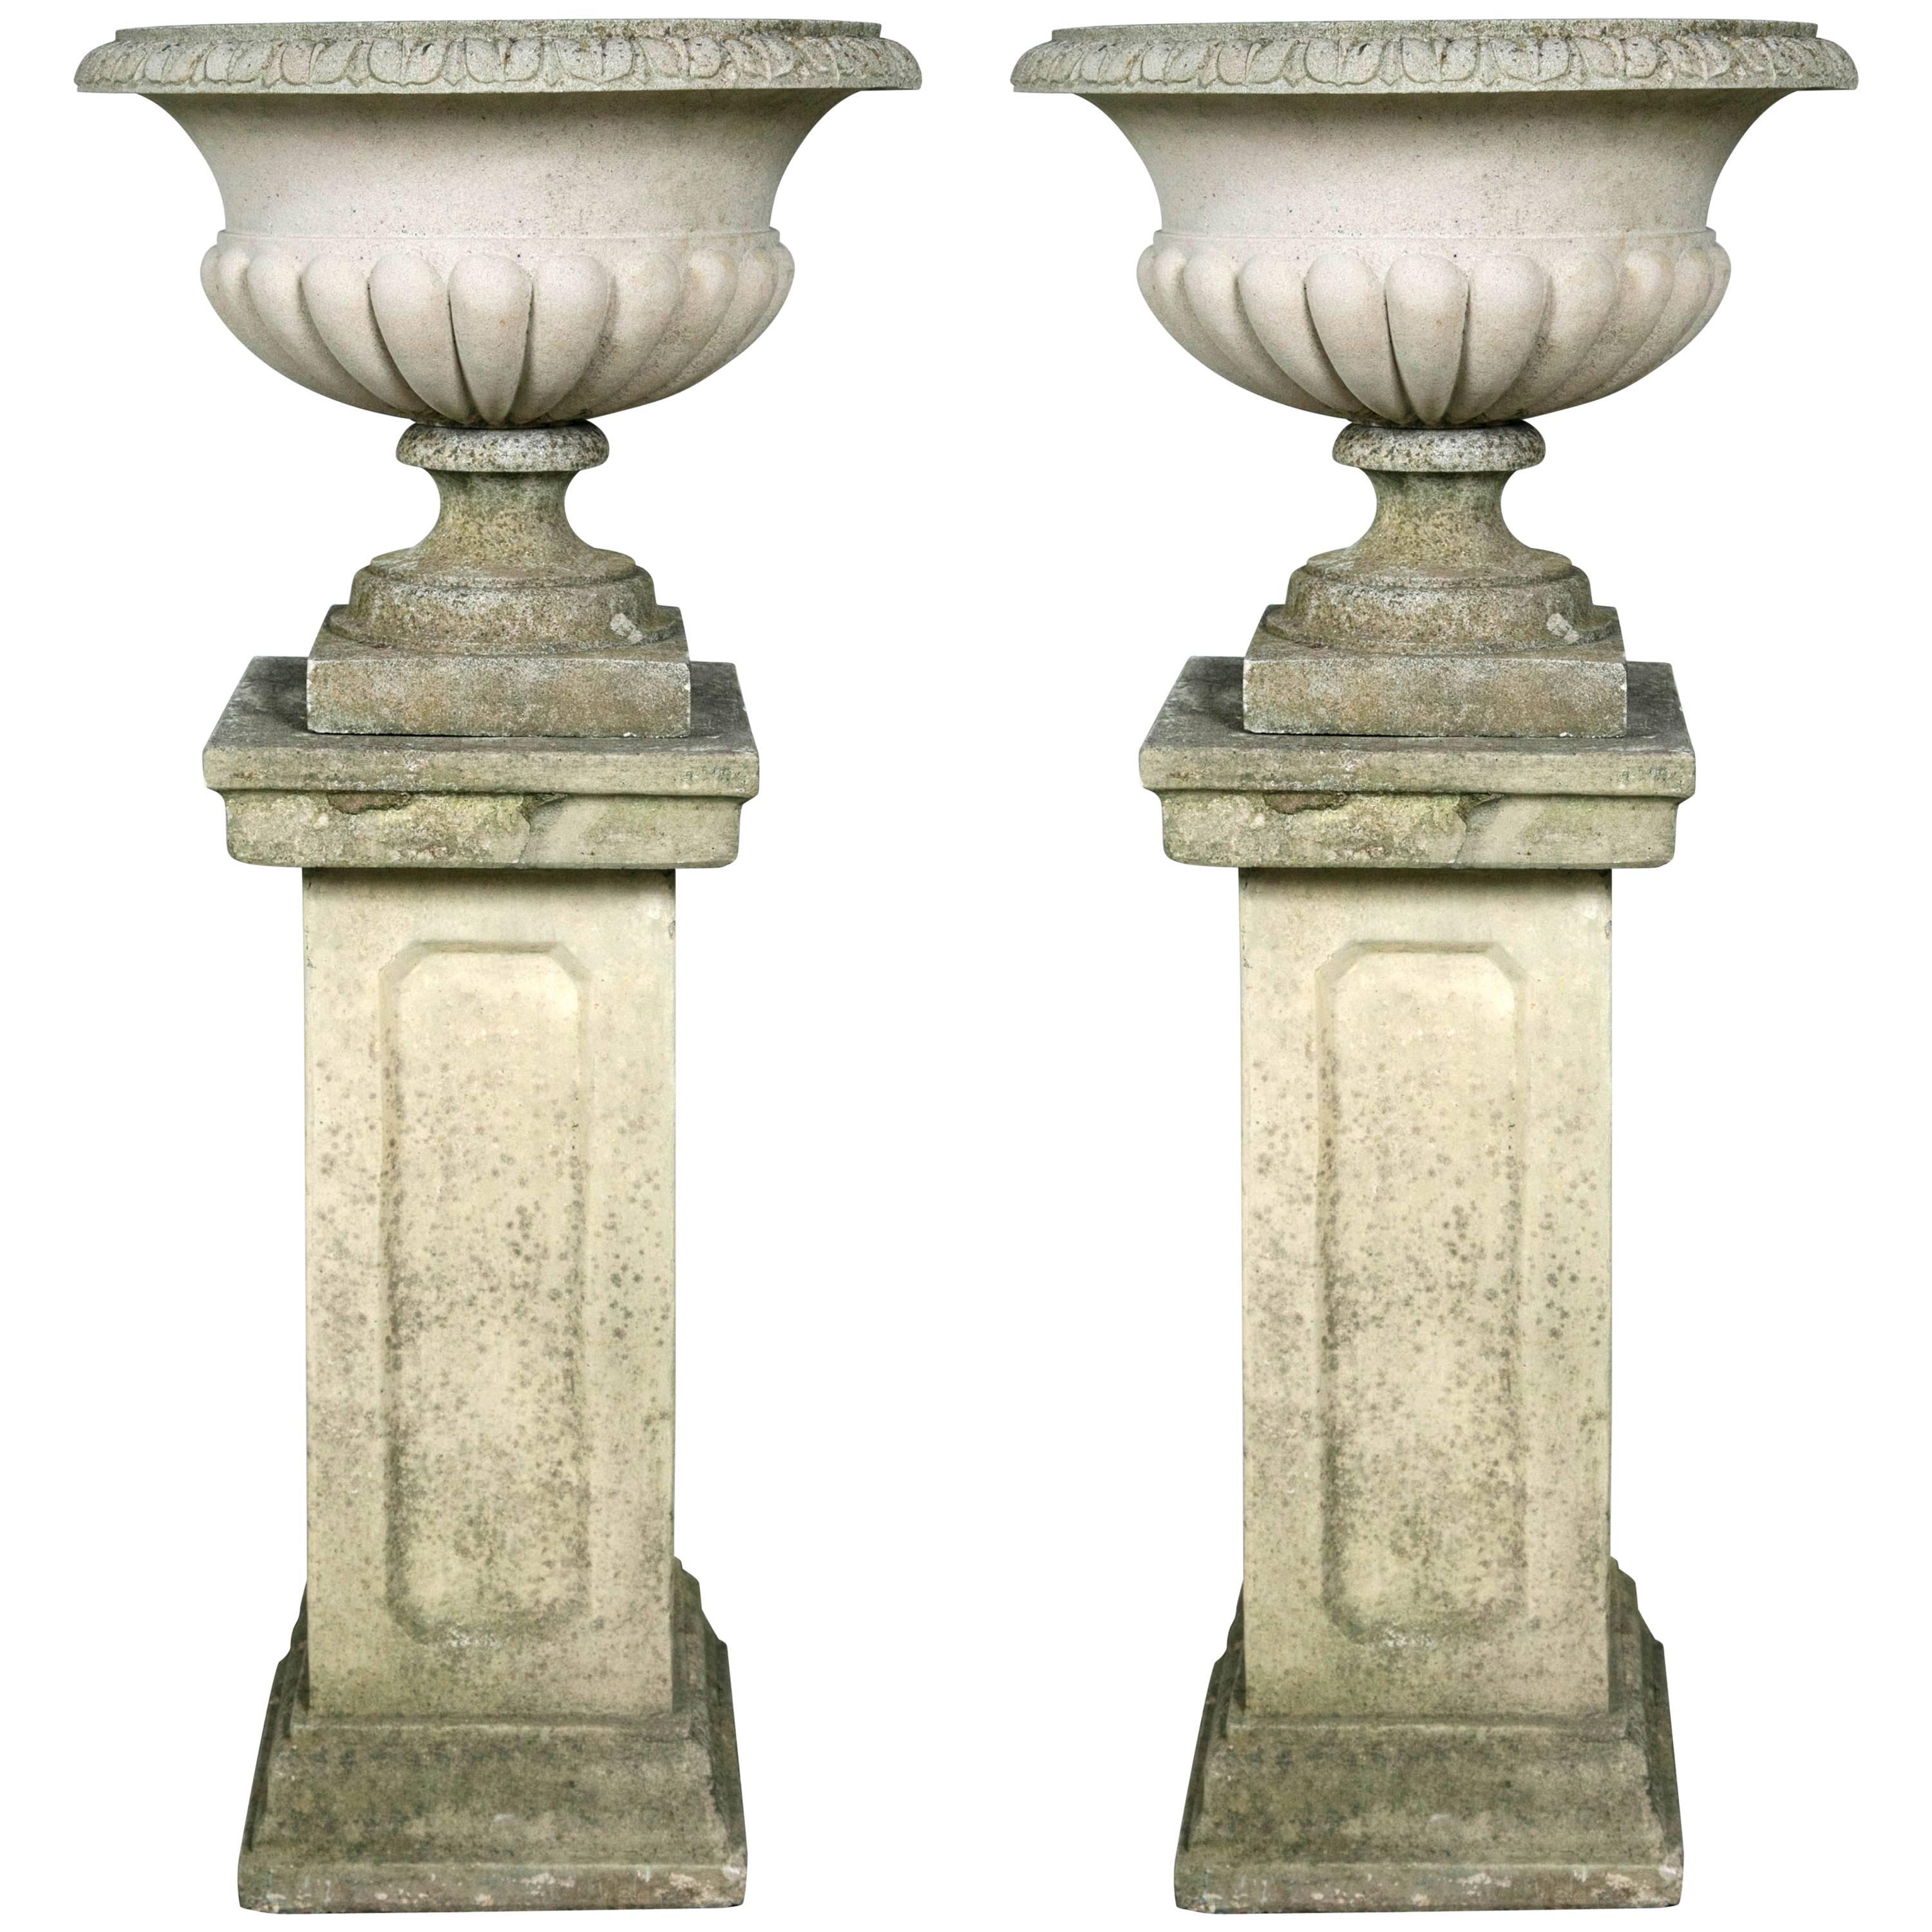 Pair of Classical English Garden Urns